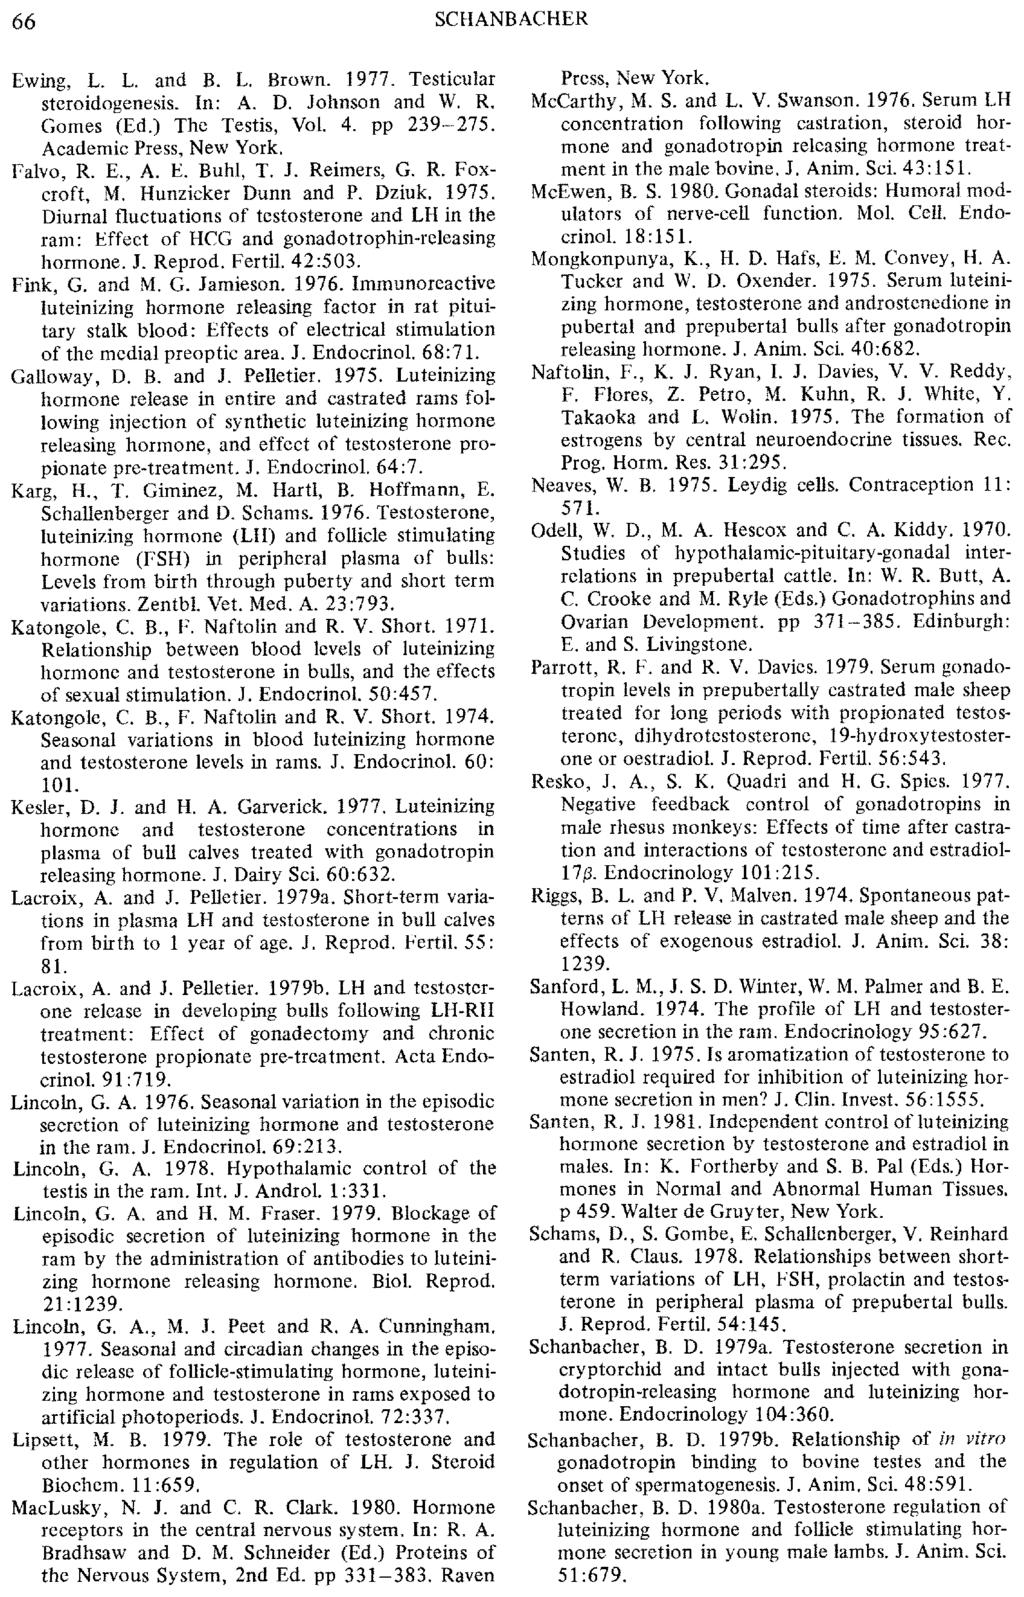 66 SCHANBACHER Ewing, L. L. and B. L. Brown. 1977. Testicular steroidogenesis. In: A. D. Johnson and W. R. Gomes (Ed.) The Testis, Vol. 4. pp 239-275. Academic Press, New York. Falvo, R. E,, A. E. Buhl, T.